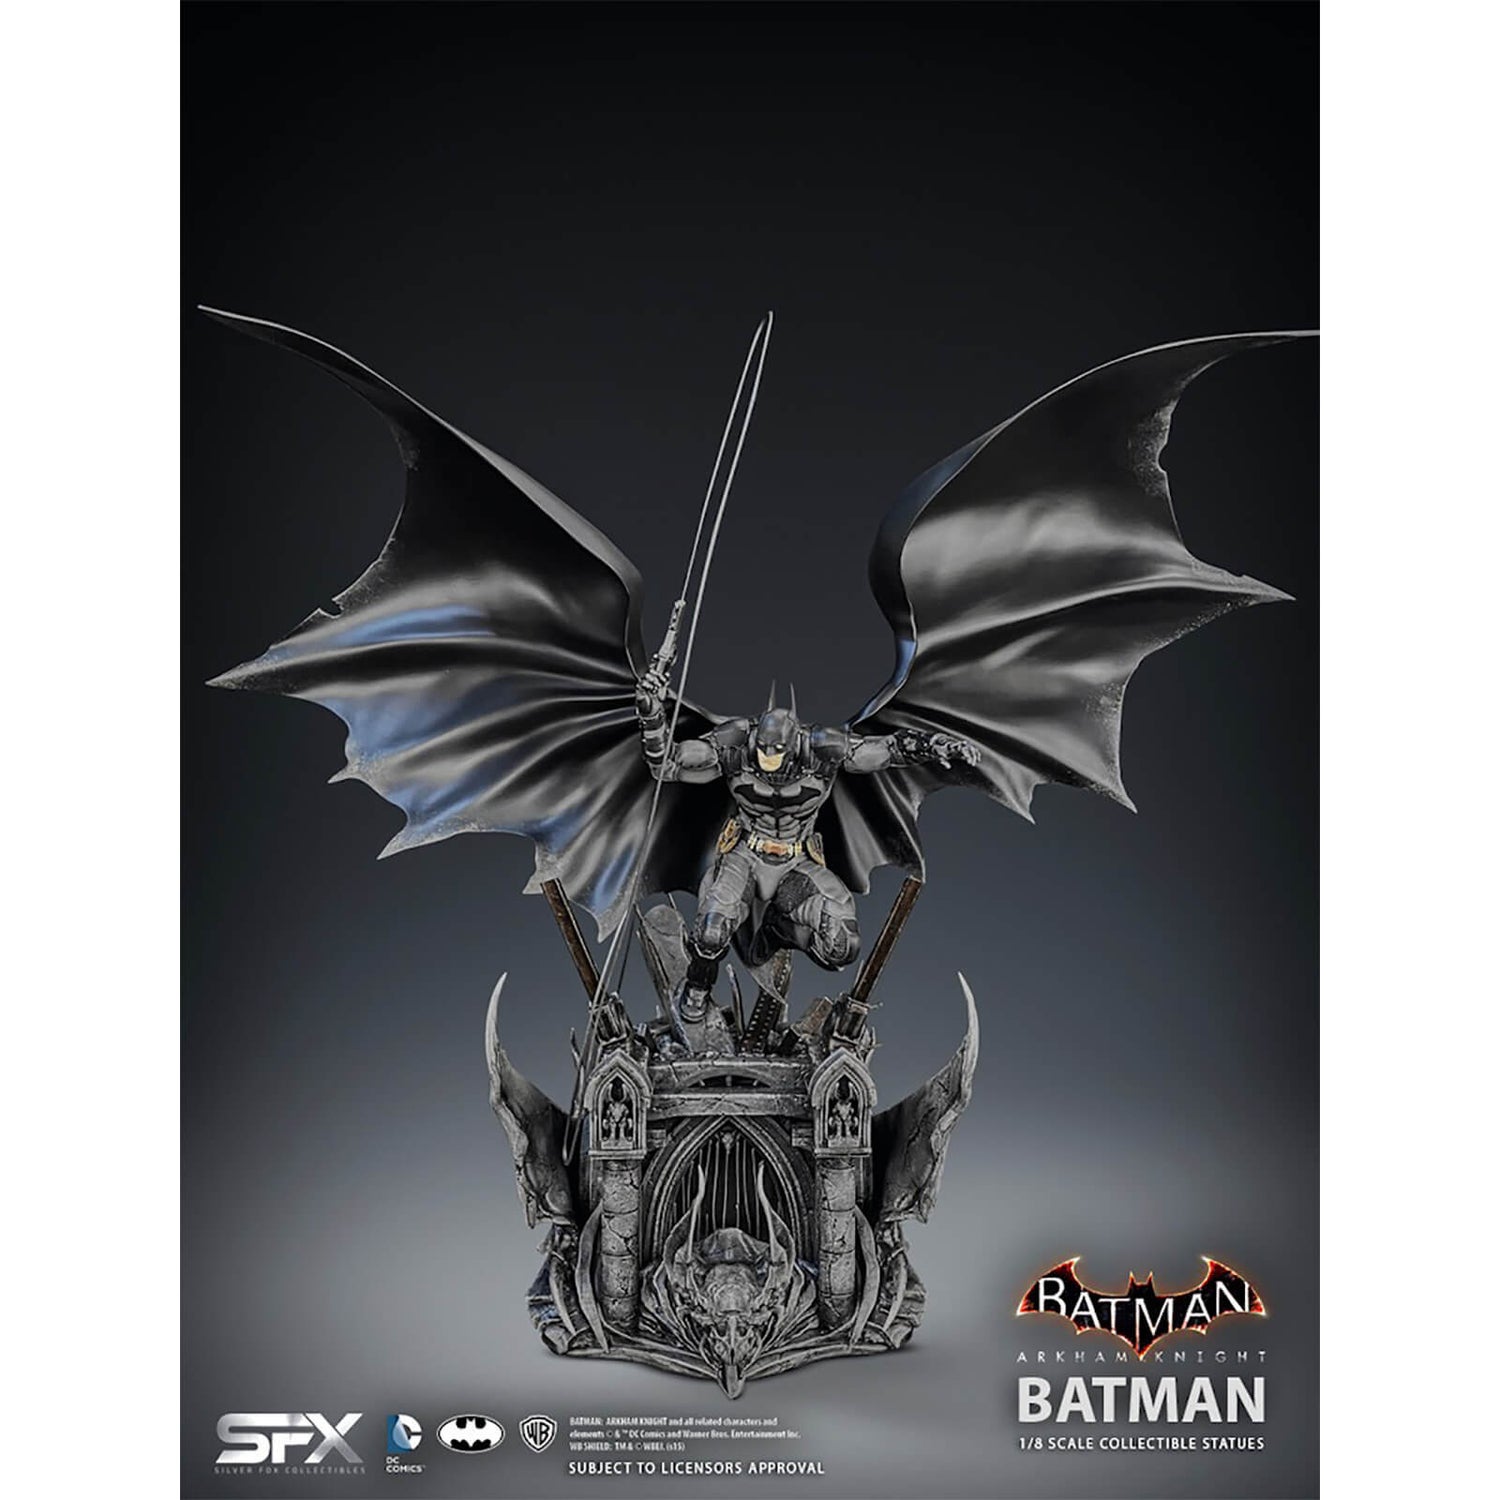 Silver Fox Collectibles Batman Arkham Knight Batman Figur im Maßstab 1:8